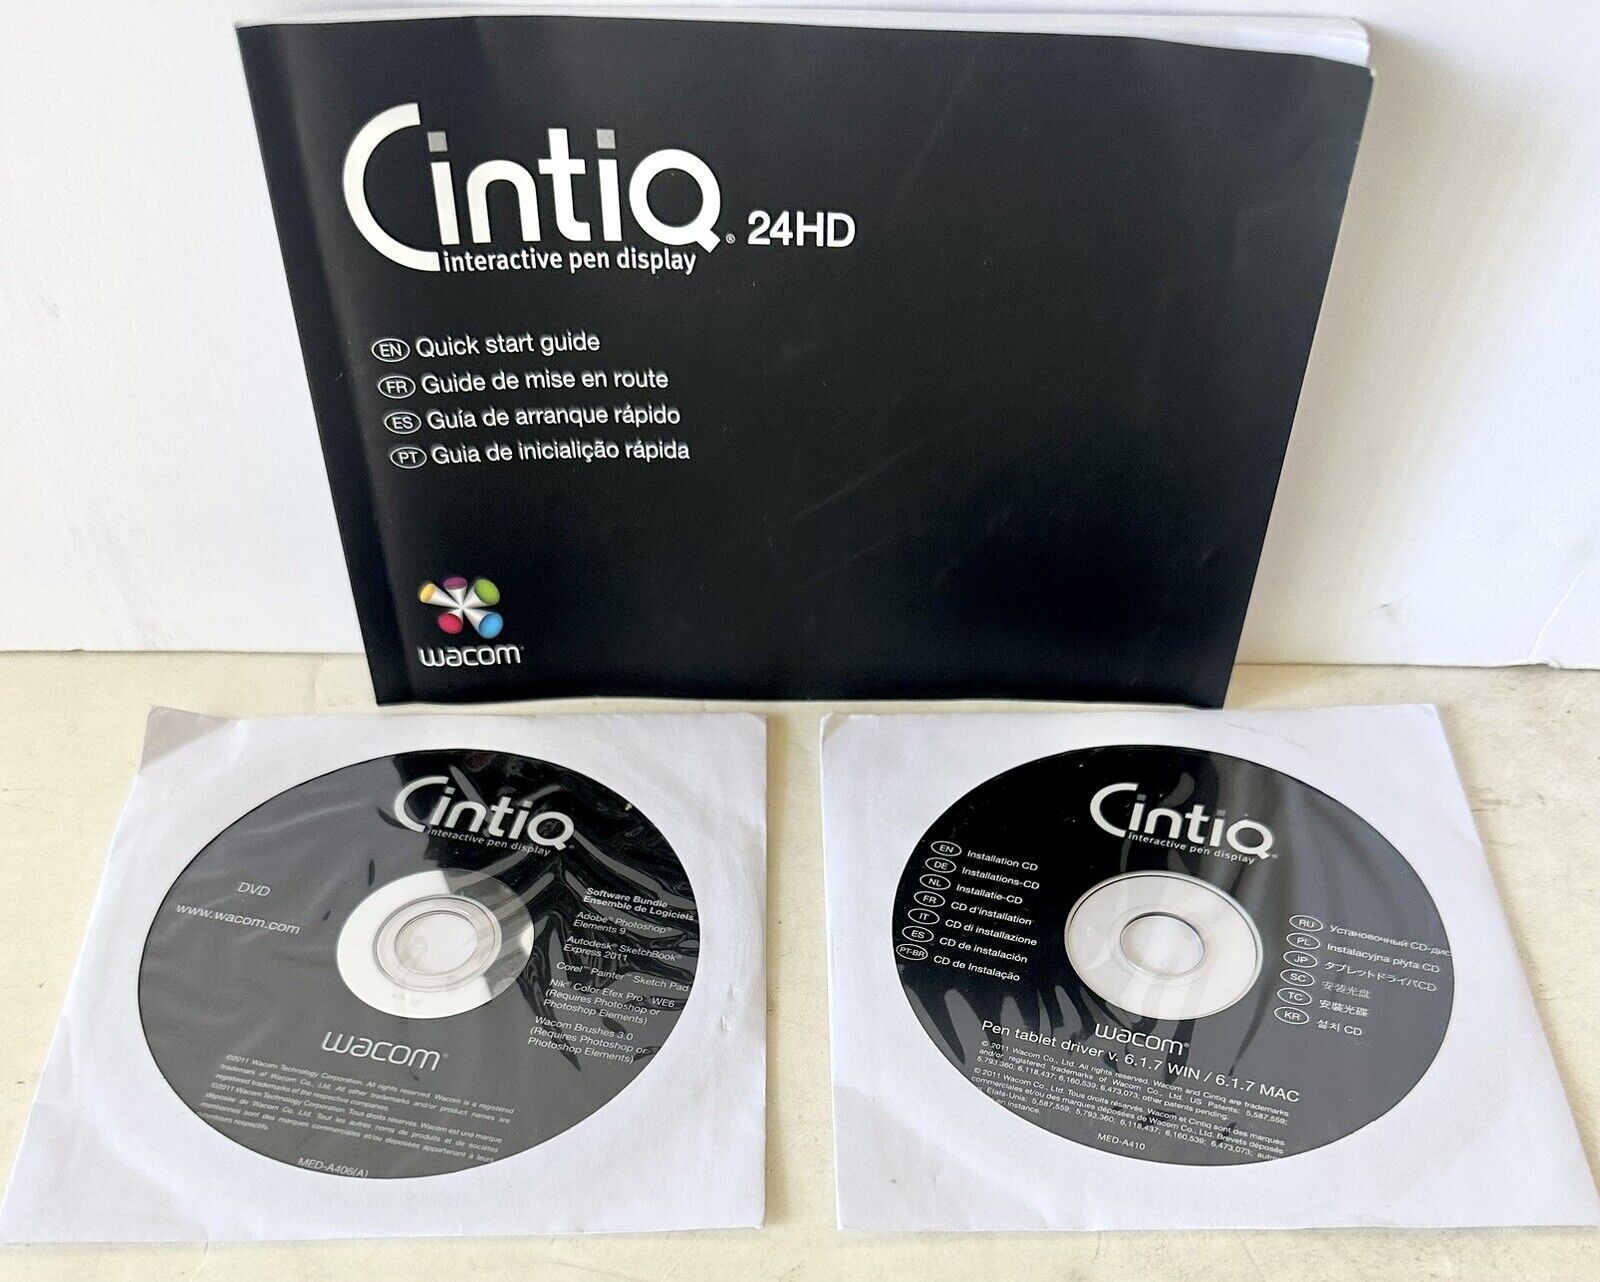 Wacom Cintiq 24HD Interactive Pen Display CD-ROM Software DVD Install CD Bundle